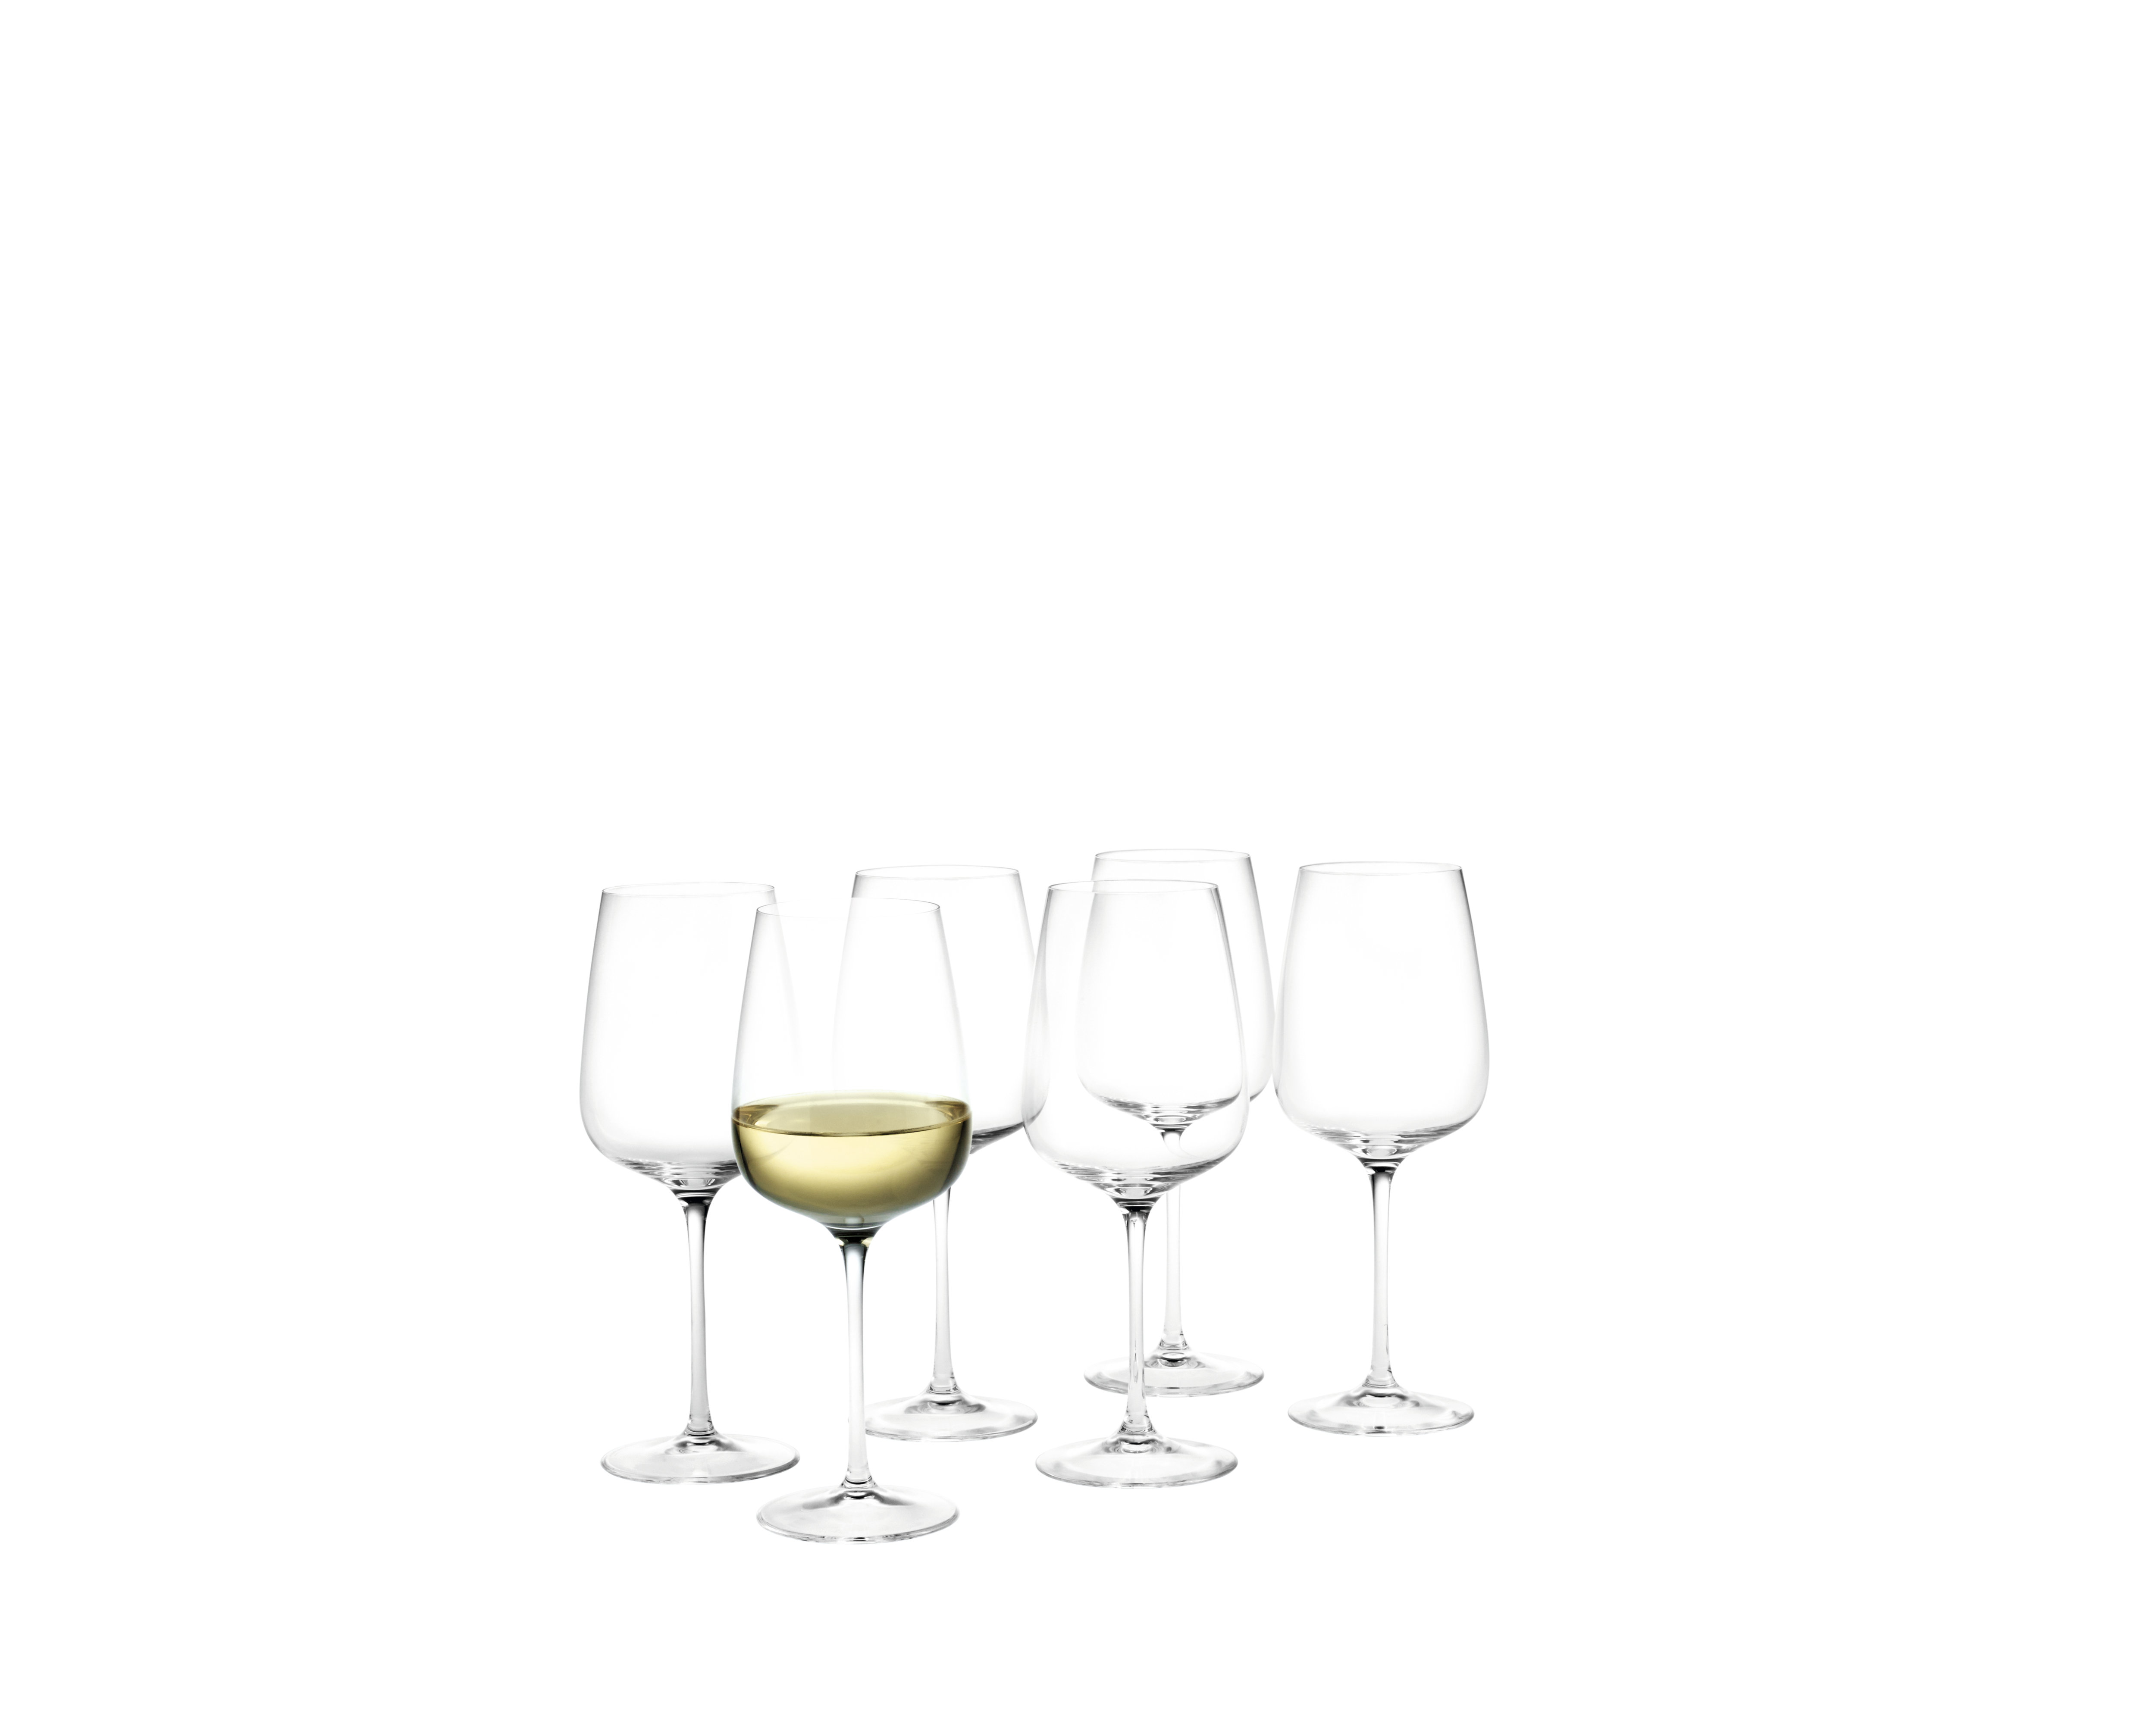 Holmegaard Cabernet Champagne Glass, Clear, 9.8 oz, 6 PCS.